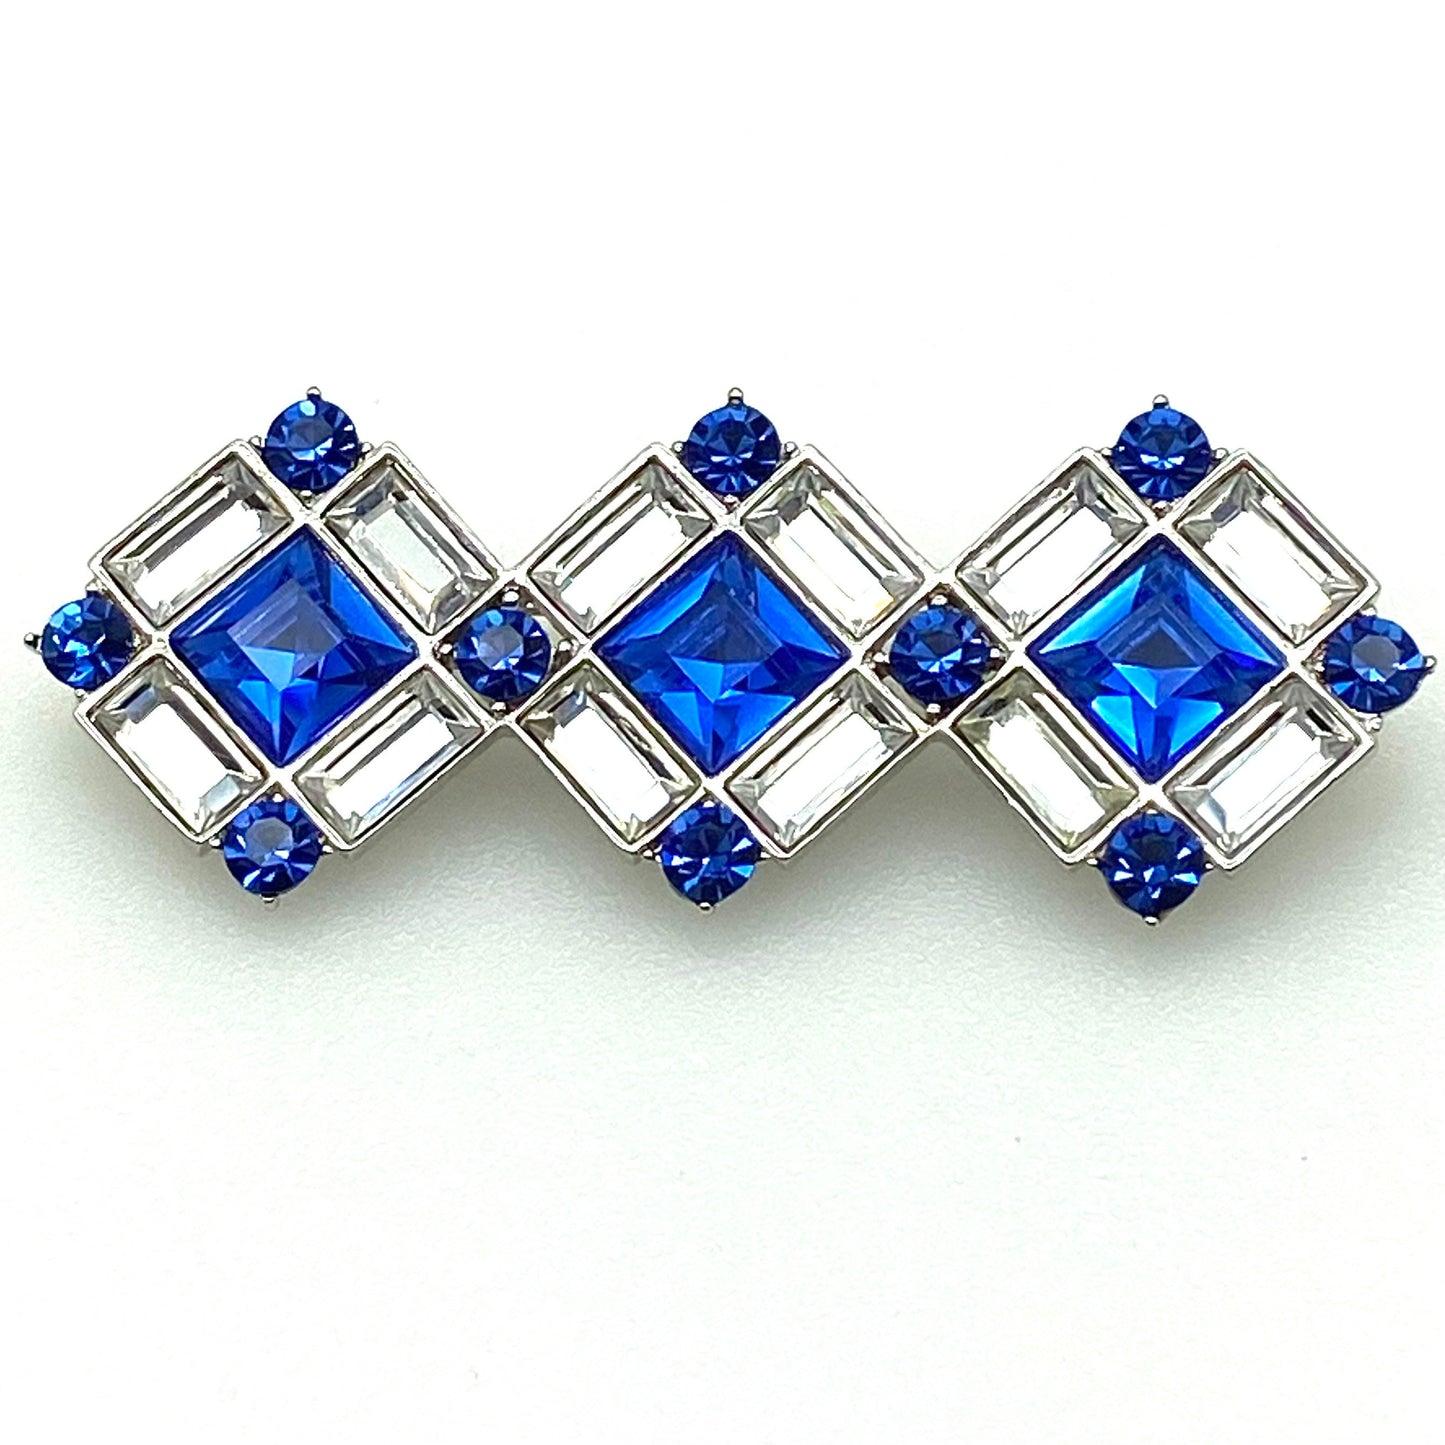 Yves Saint Laurent Large Royal Blue and Clear Crystal Geometric Bar Brooch